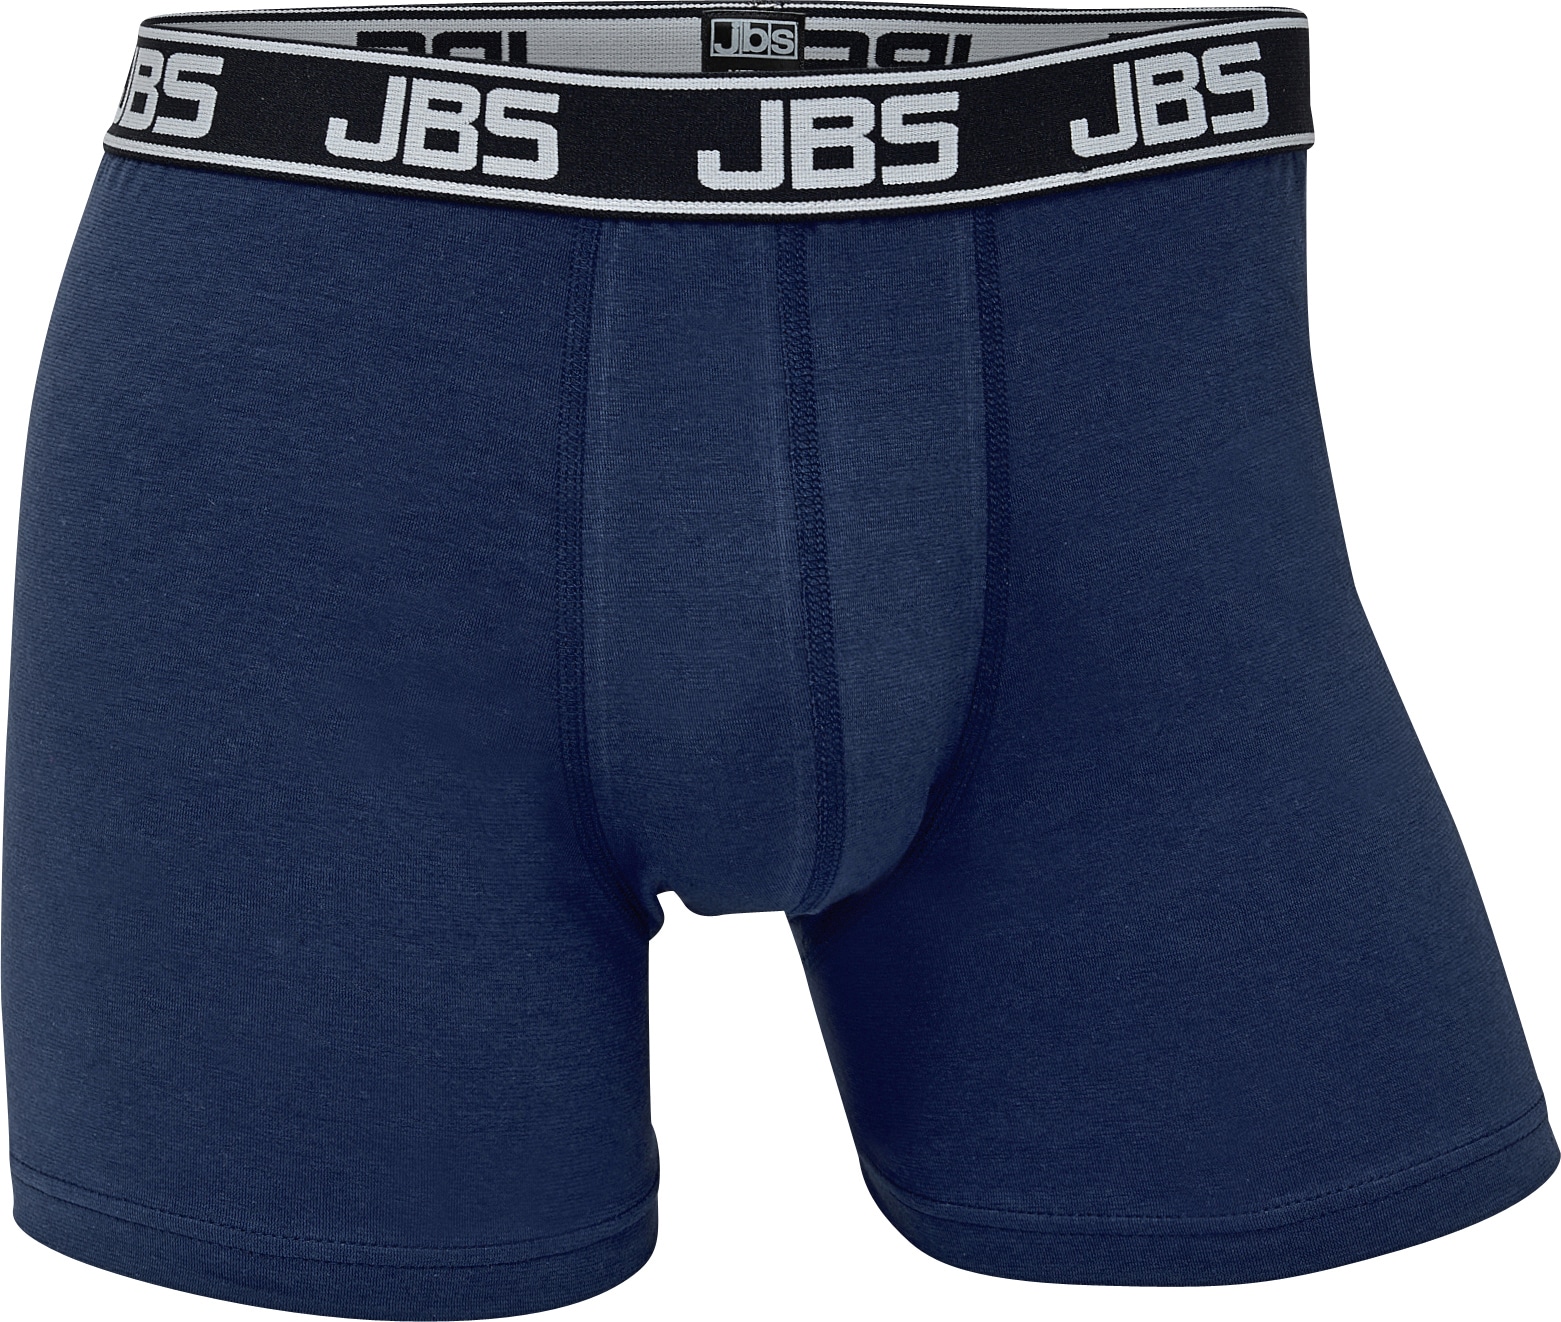 JBS tights - 3XL - NAVY